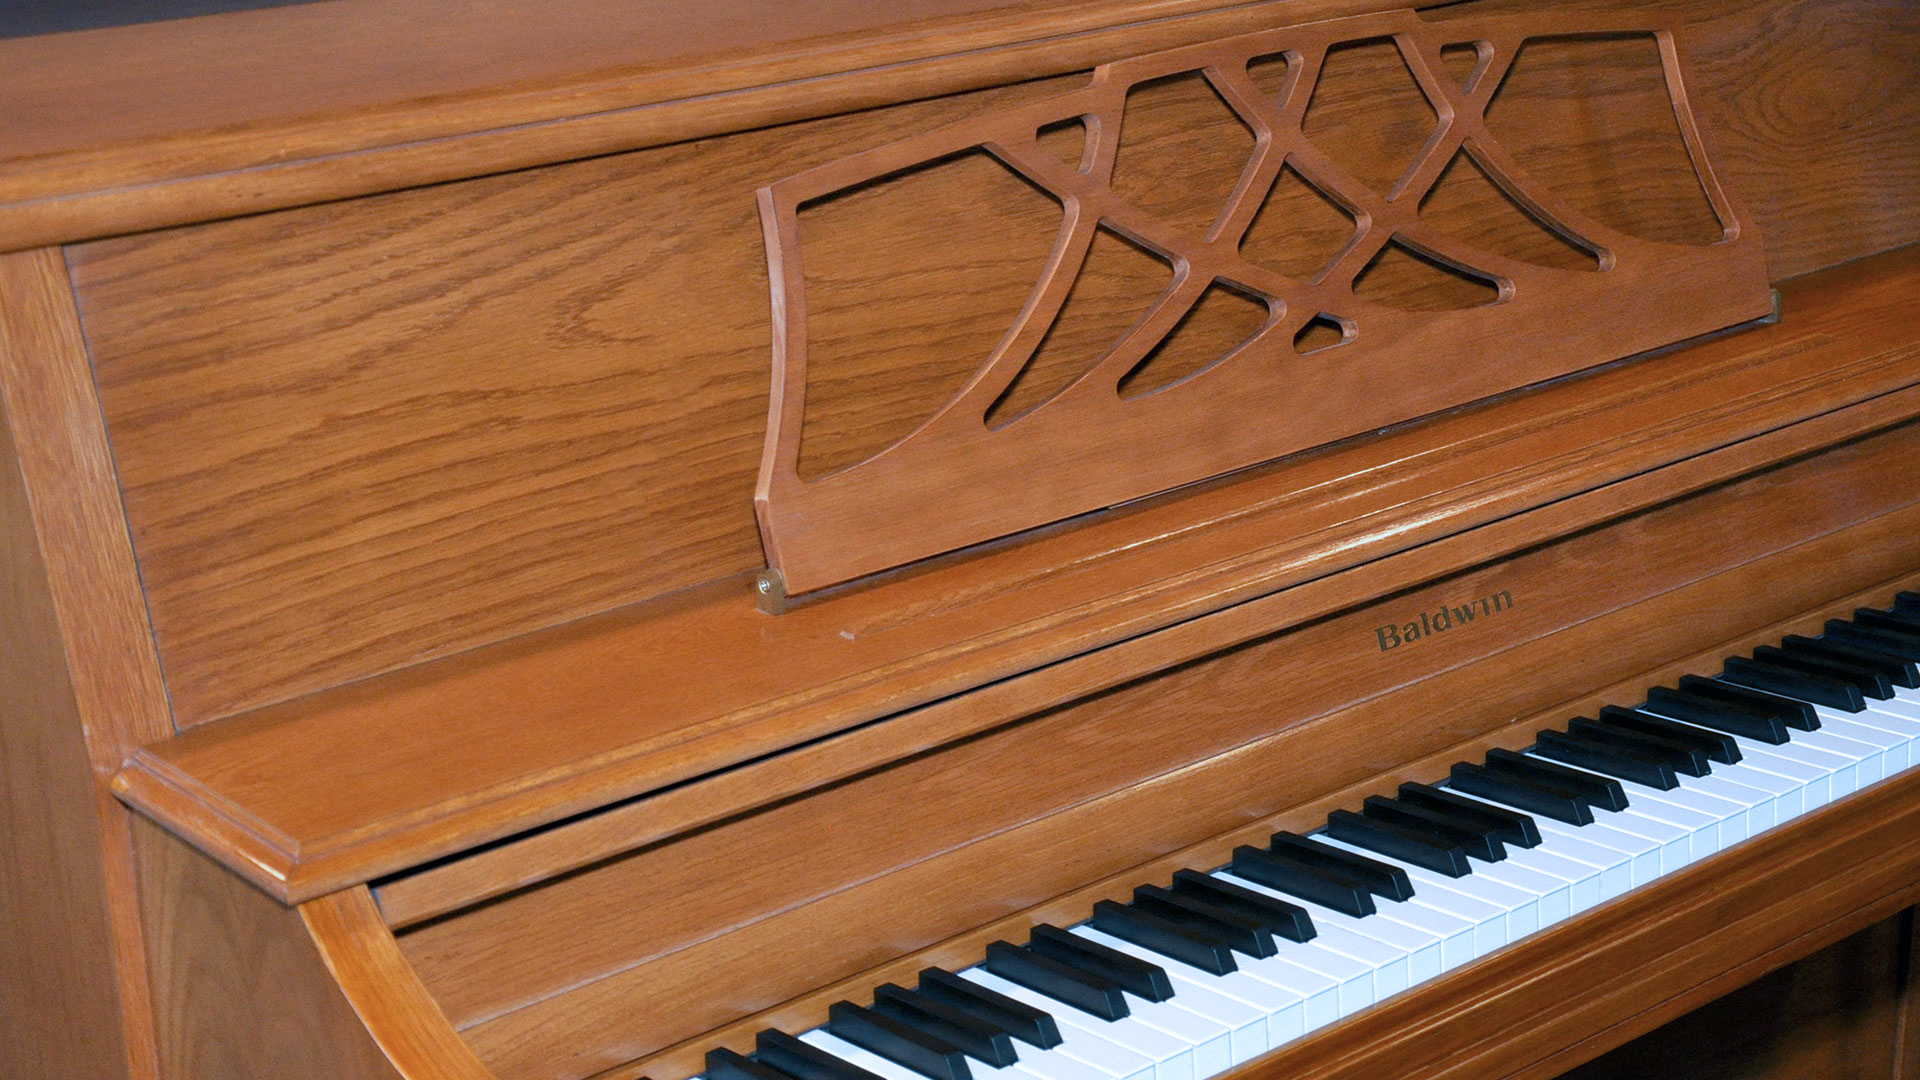 Baldwin piano Model 5057